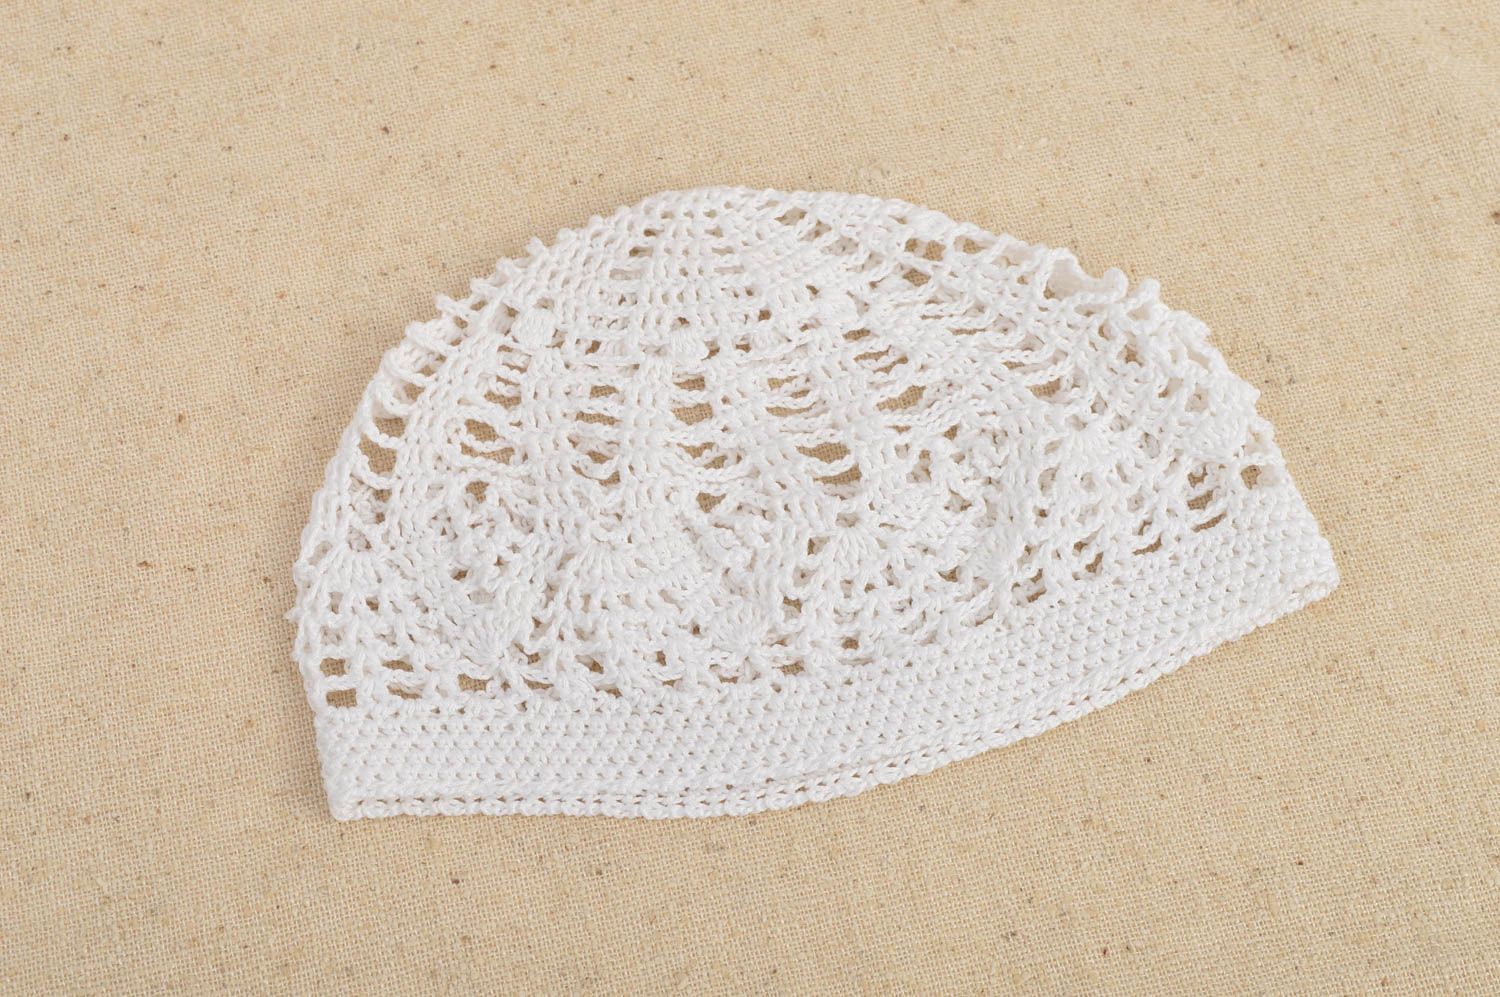 Stylish handmade crochet hat baby hat designs head accessories for girls photo 1